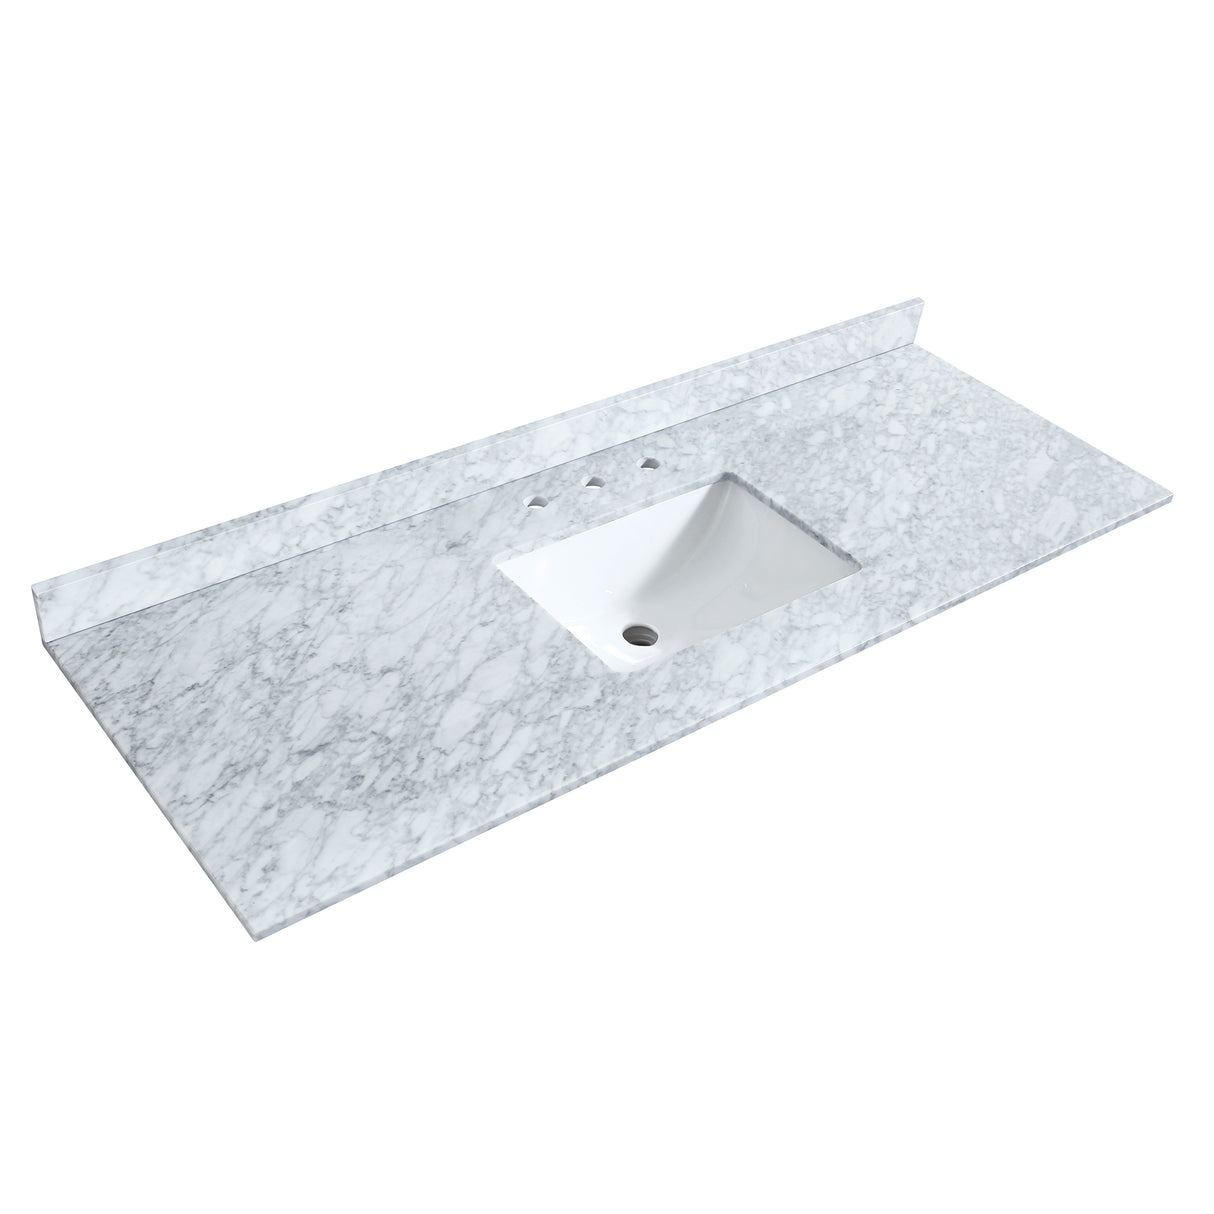 Deborah 60 Inch Single Bathroom Vanity in White White Carrara Marble Countertop Undermount Square Sink Matte Black Trim 58 Inch Mirror